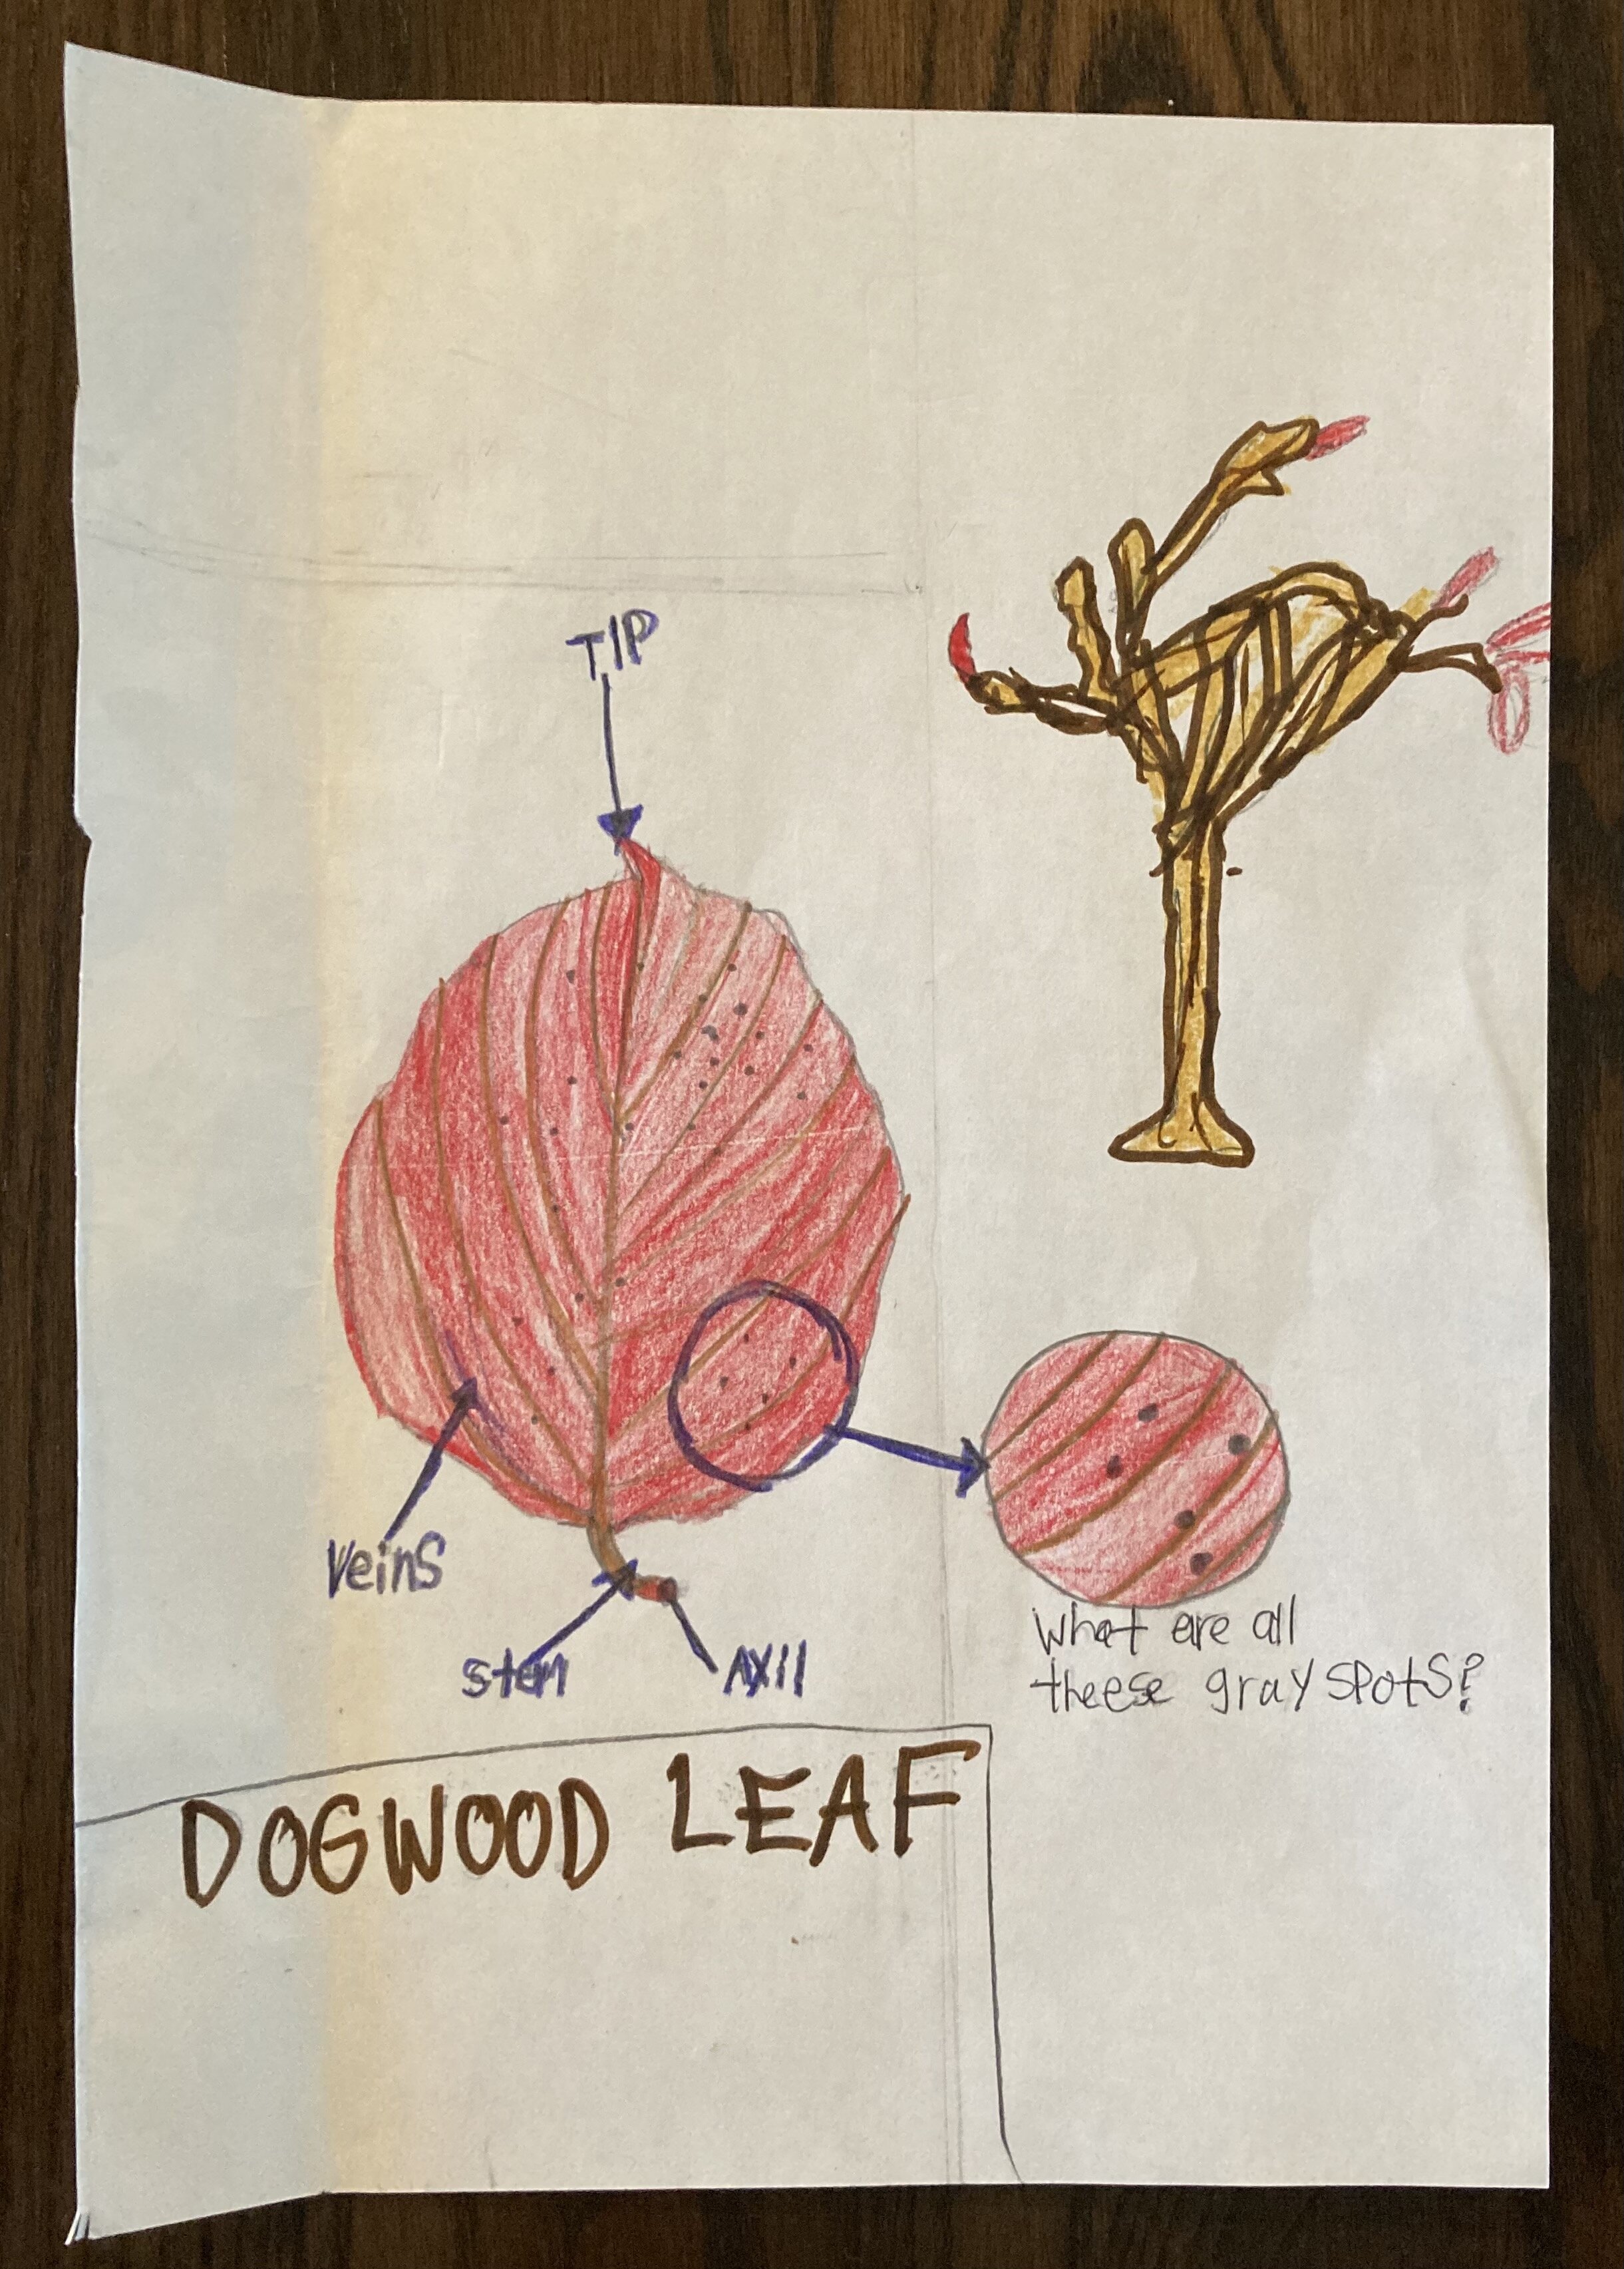 Dogwood Leaf by Brayden Ingalls - 3rd Place - Grades 6-8